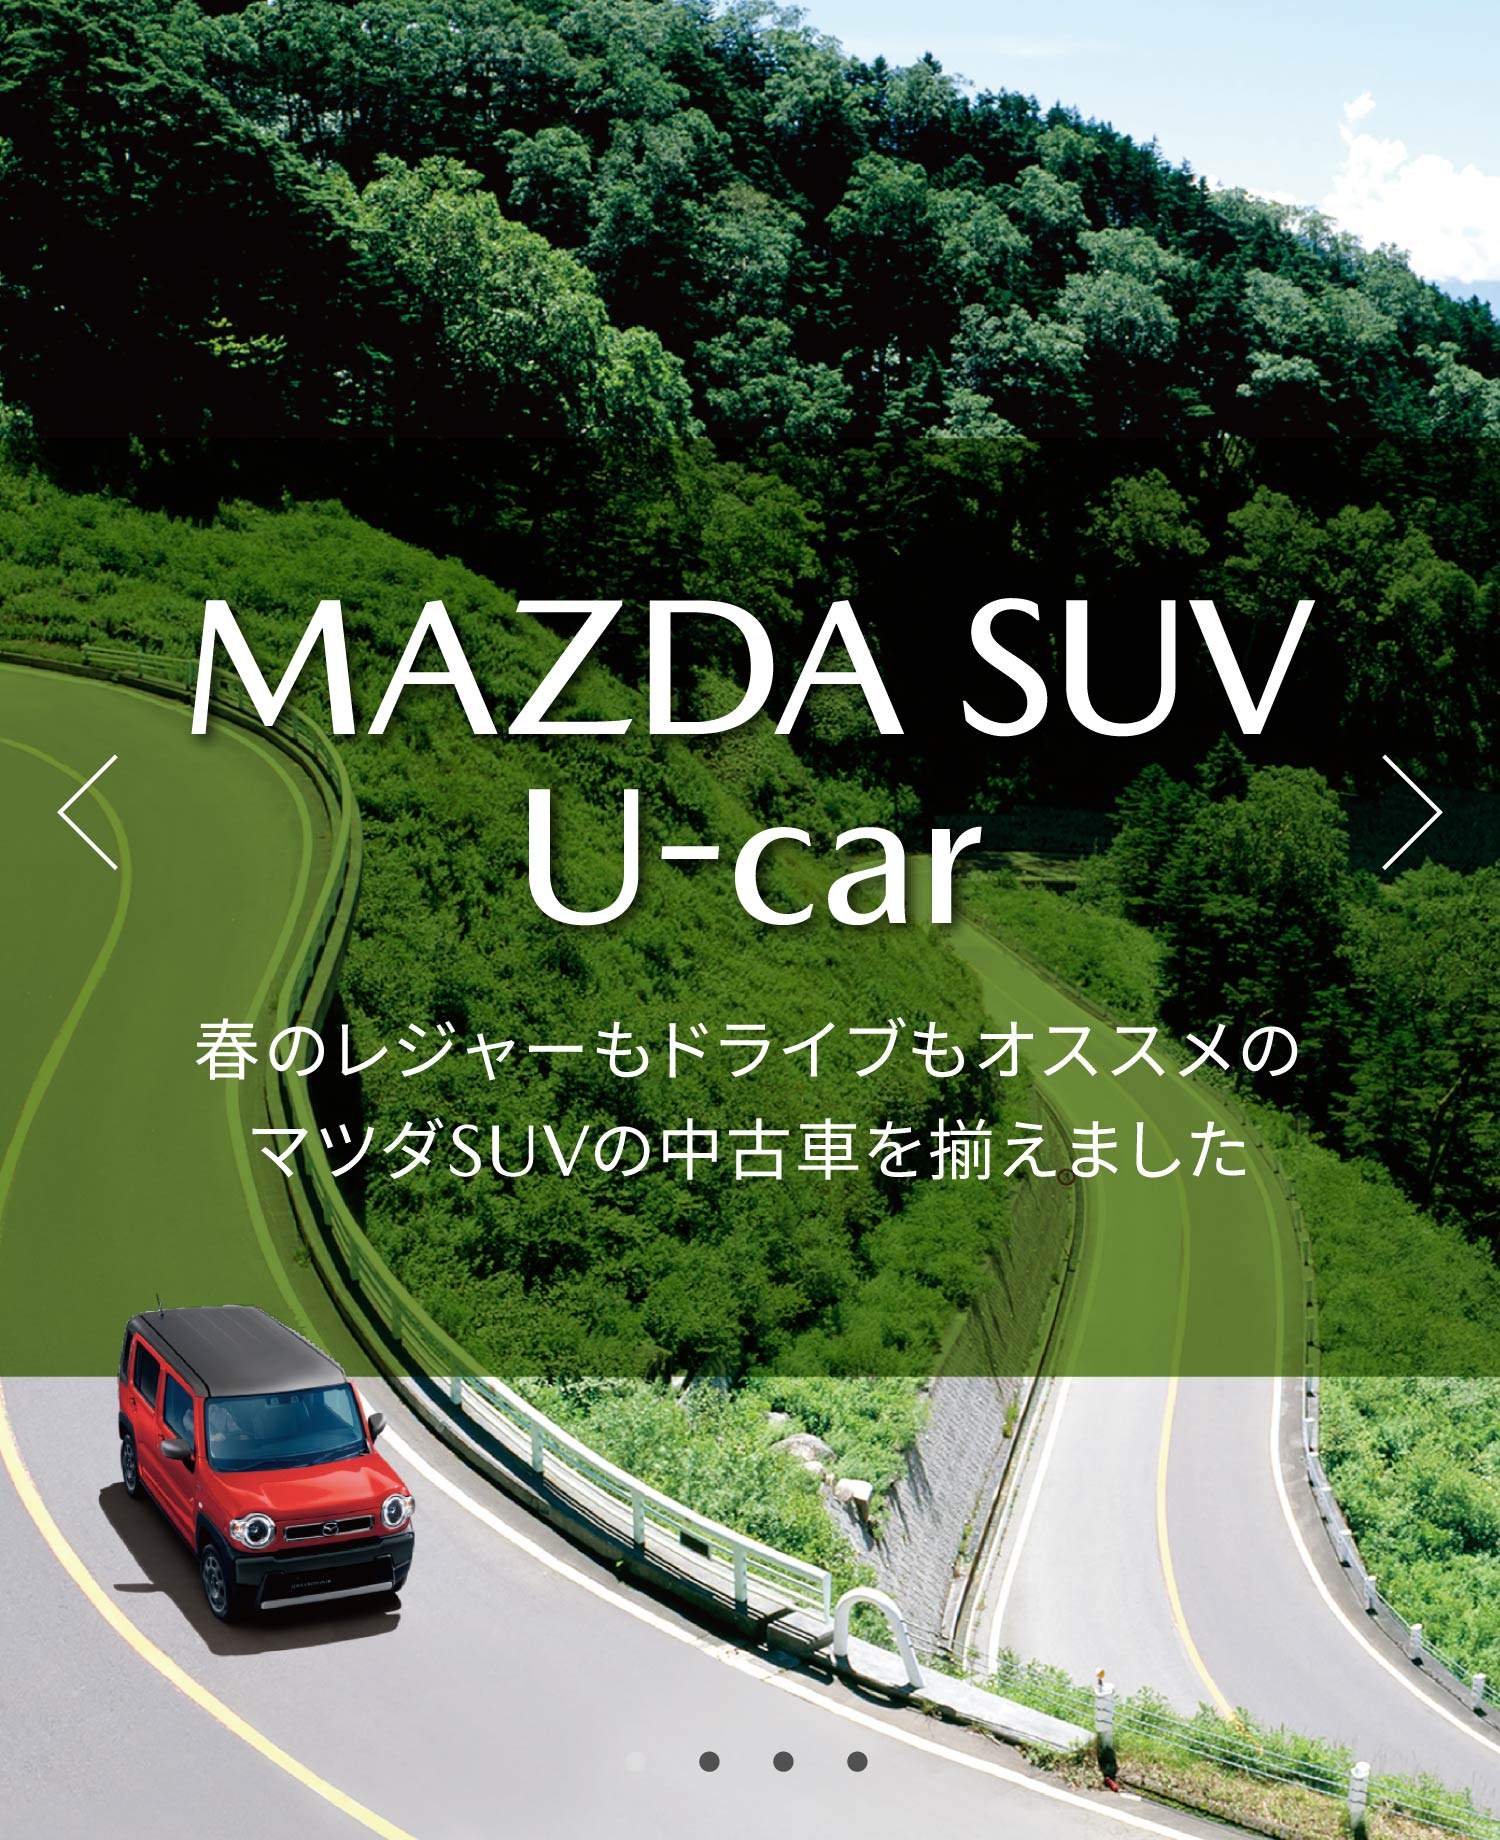 MAZDA SUV U-CAR